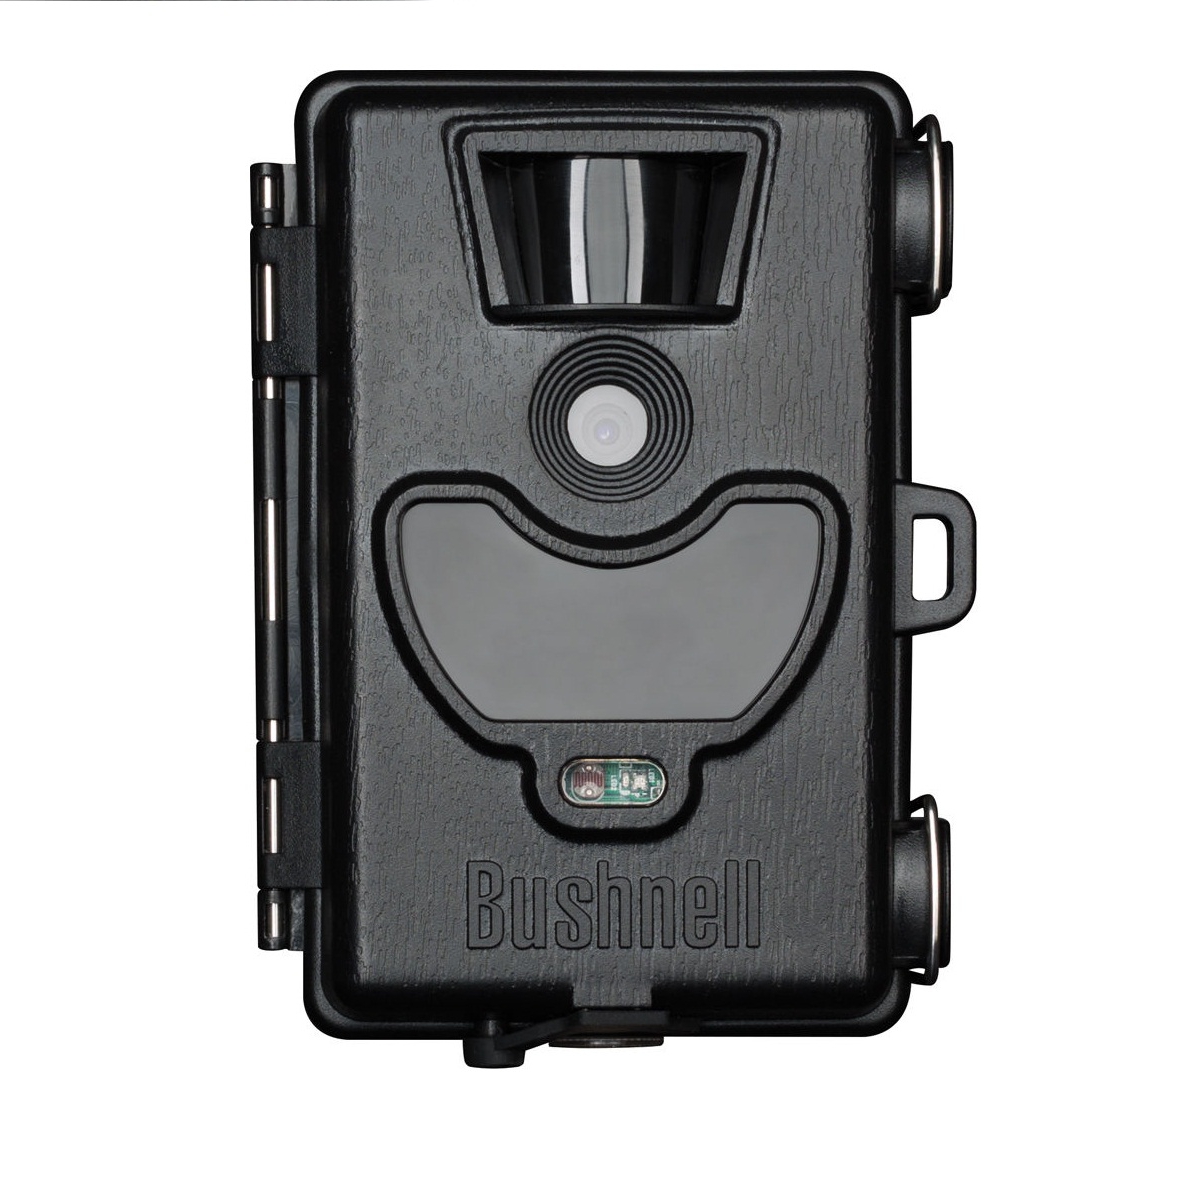 Bushnell Surveillance Camera Black LED WiFi